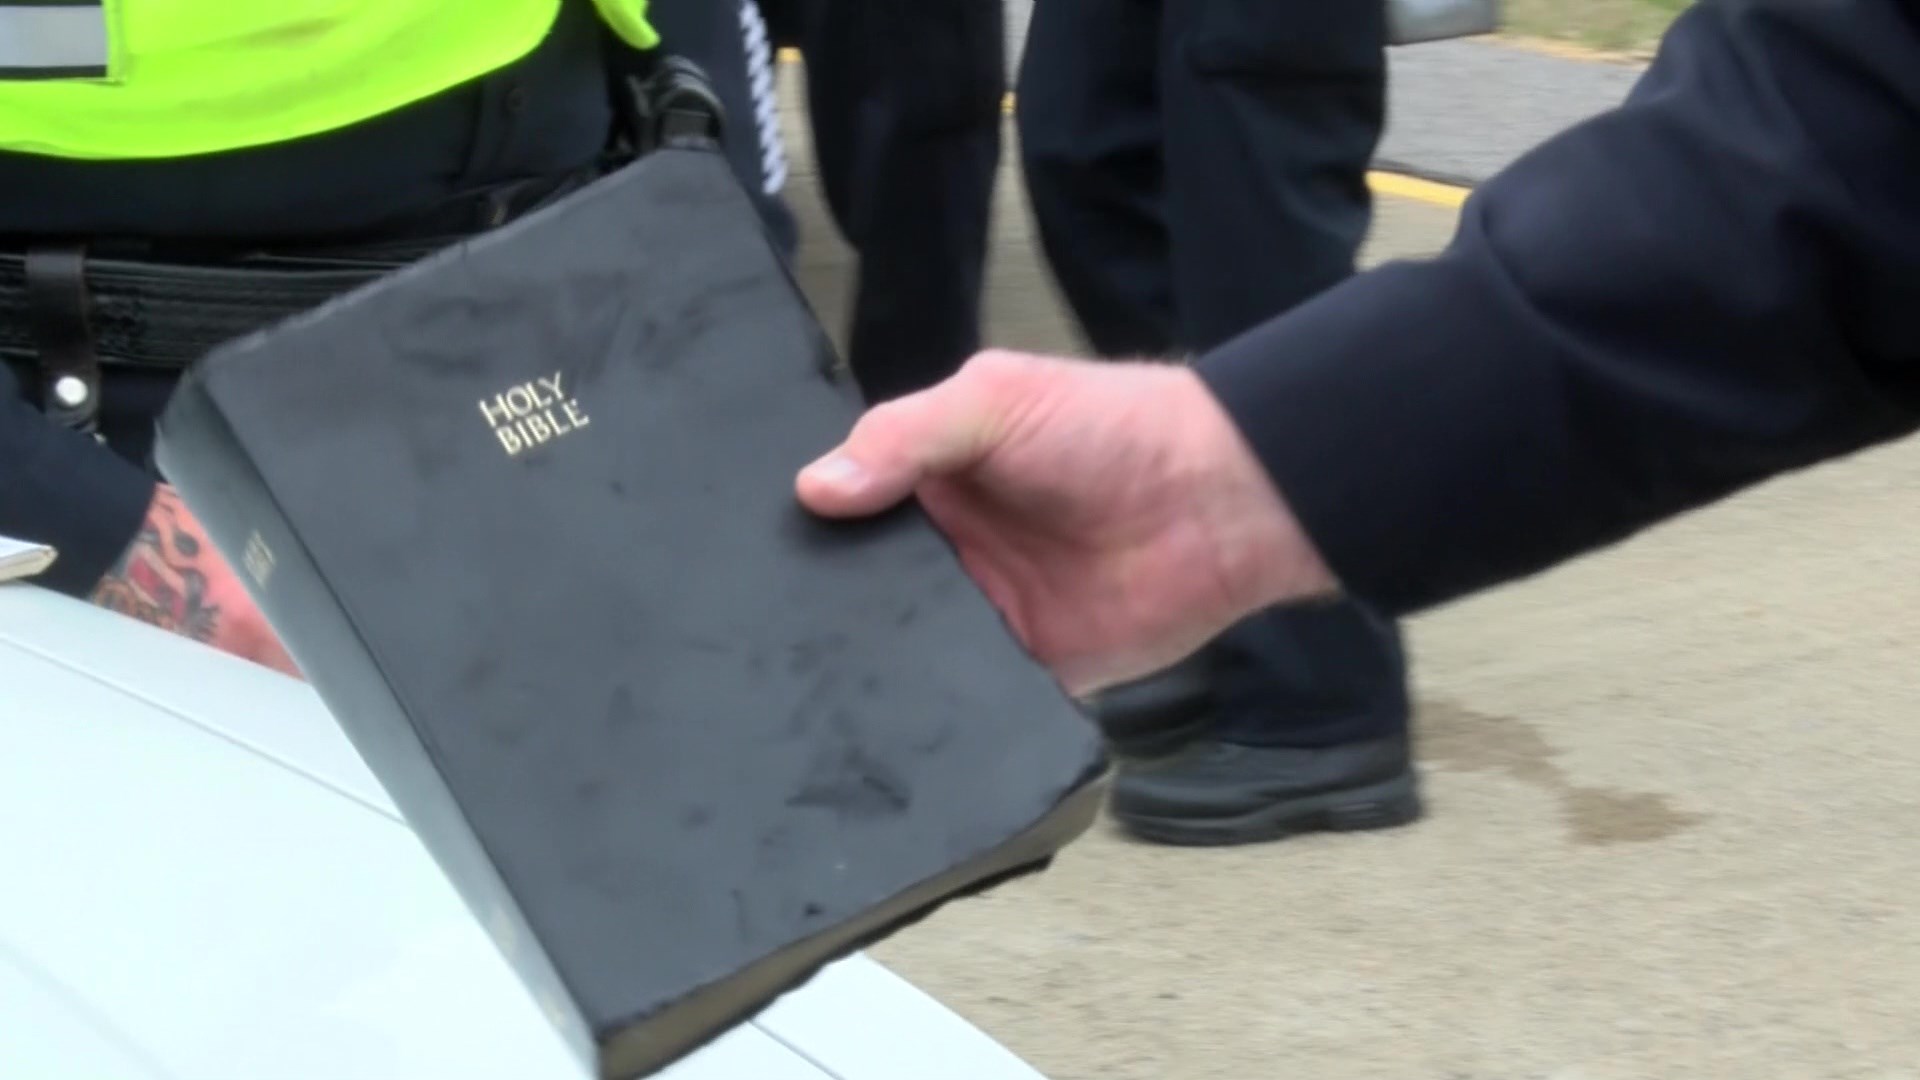 Bible Survived Fiery Car Crash